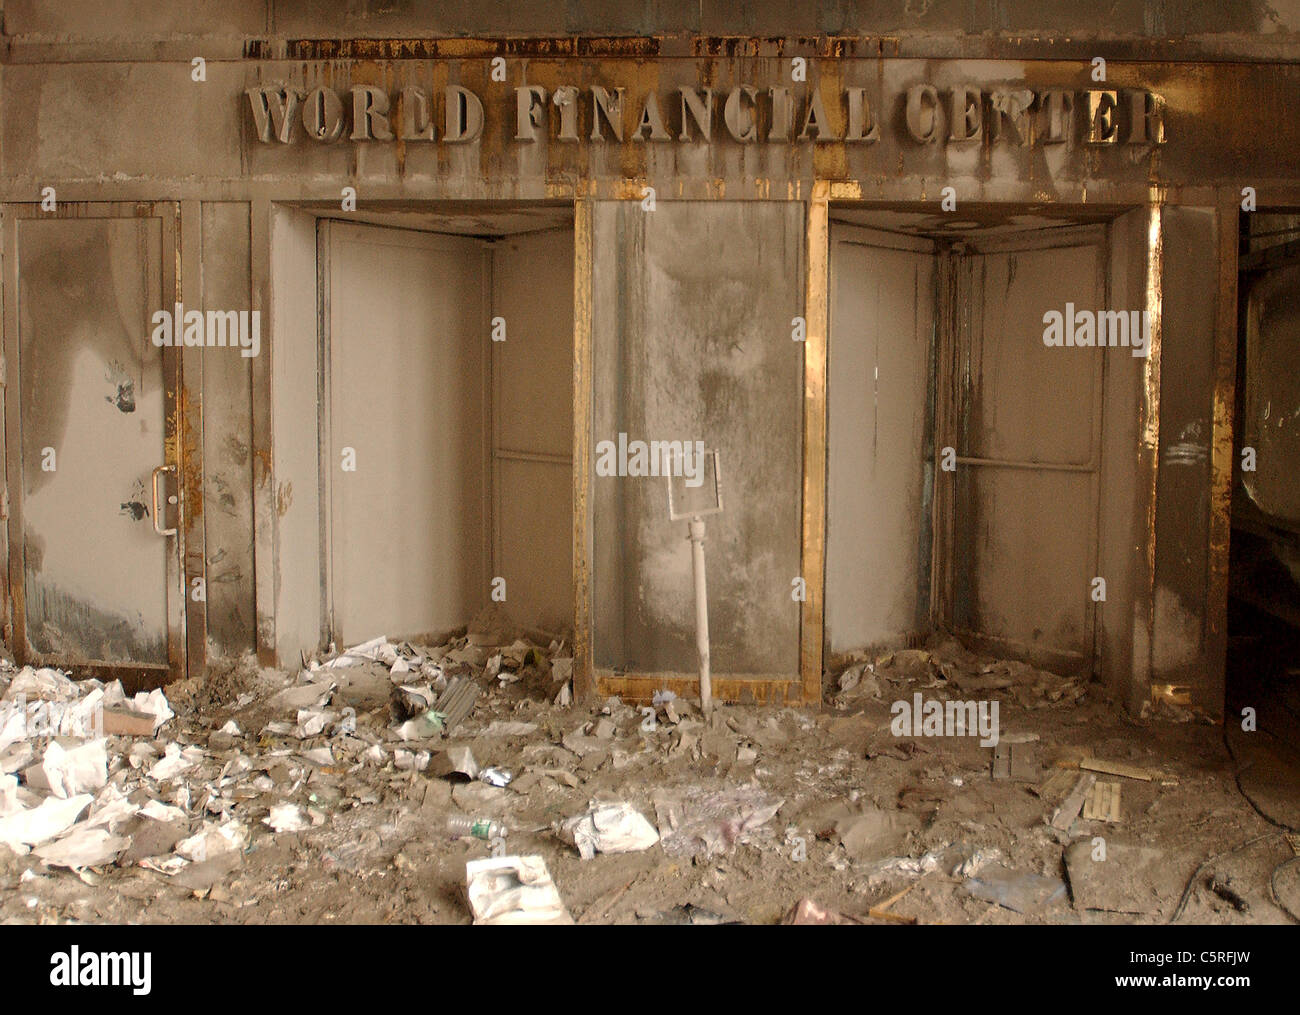 Wreckage at ground zero, the World Trade Center following 911 terrorist attacks Stock Photo